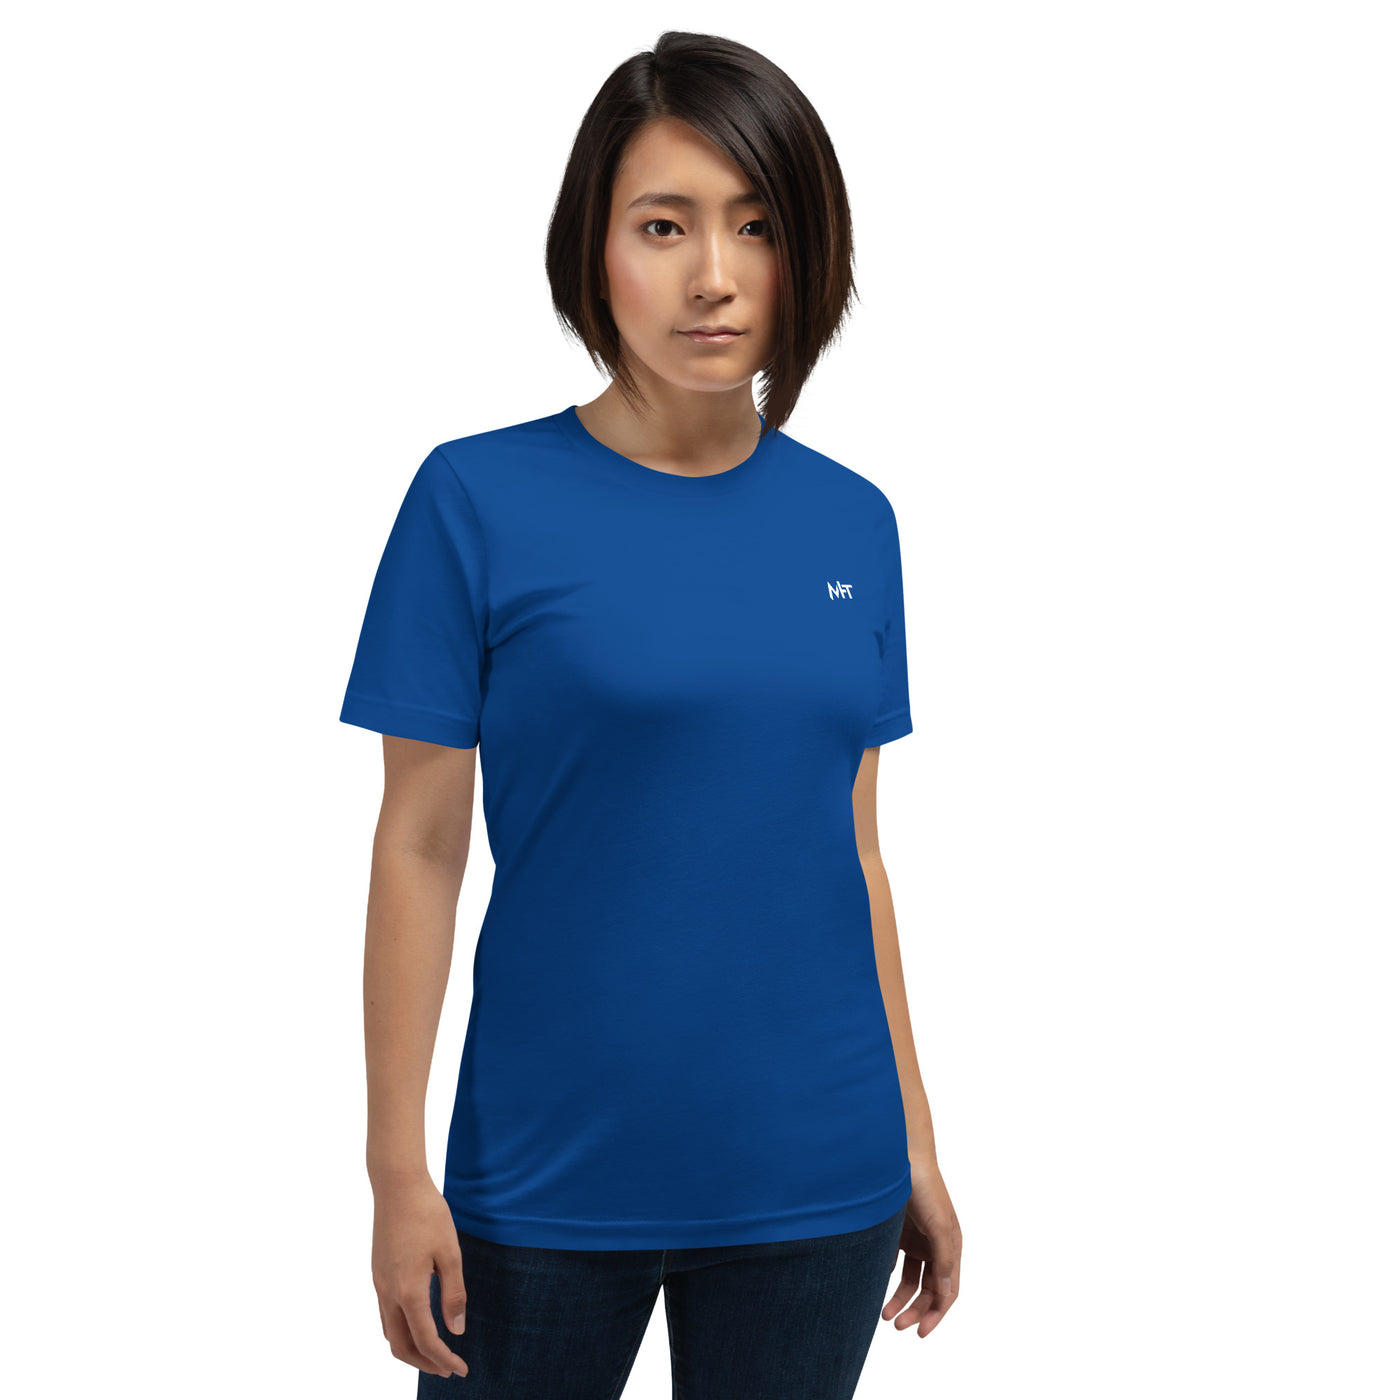 Just a girl who loves programming - Unisex t-shirt ( Back Print )